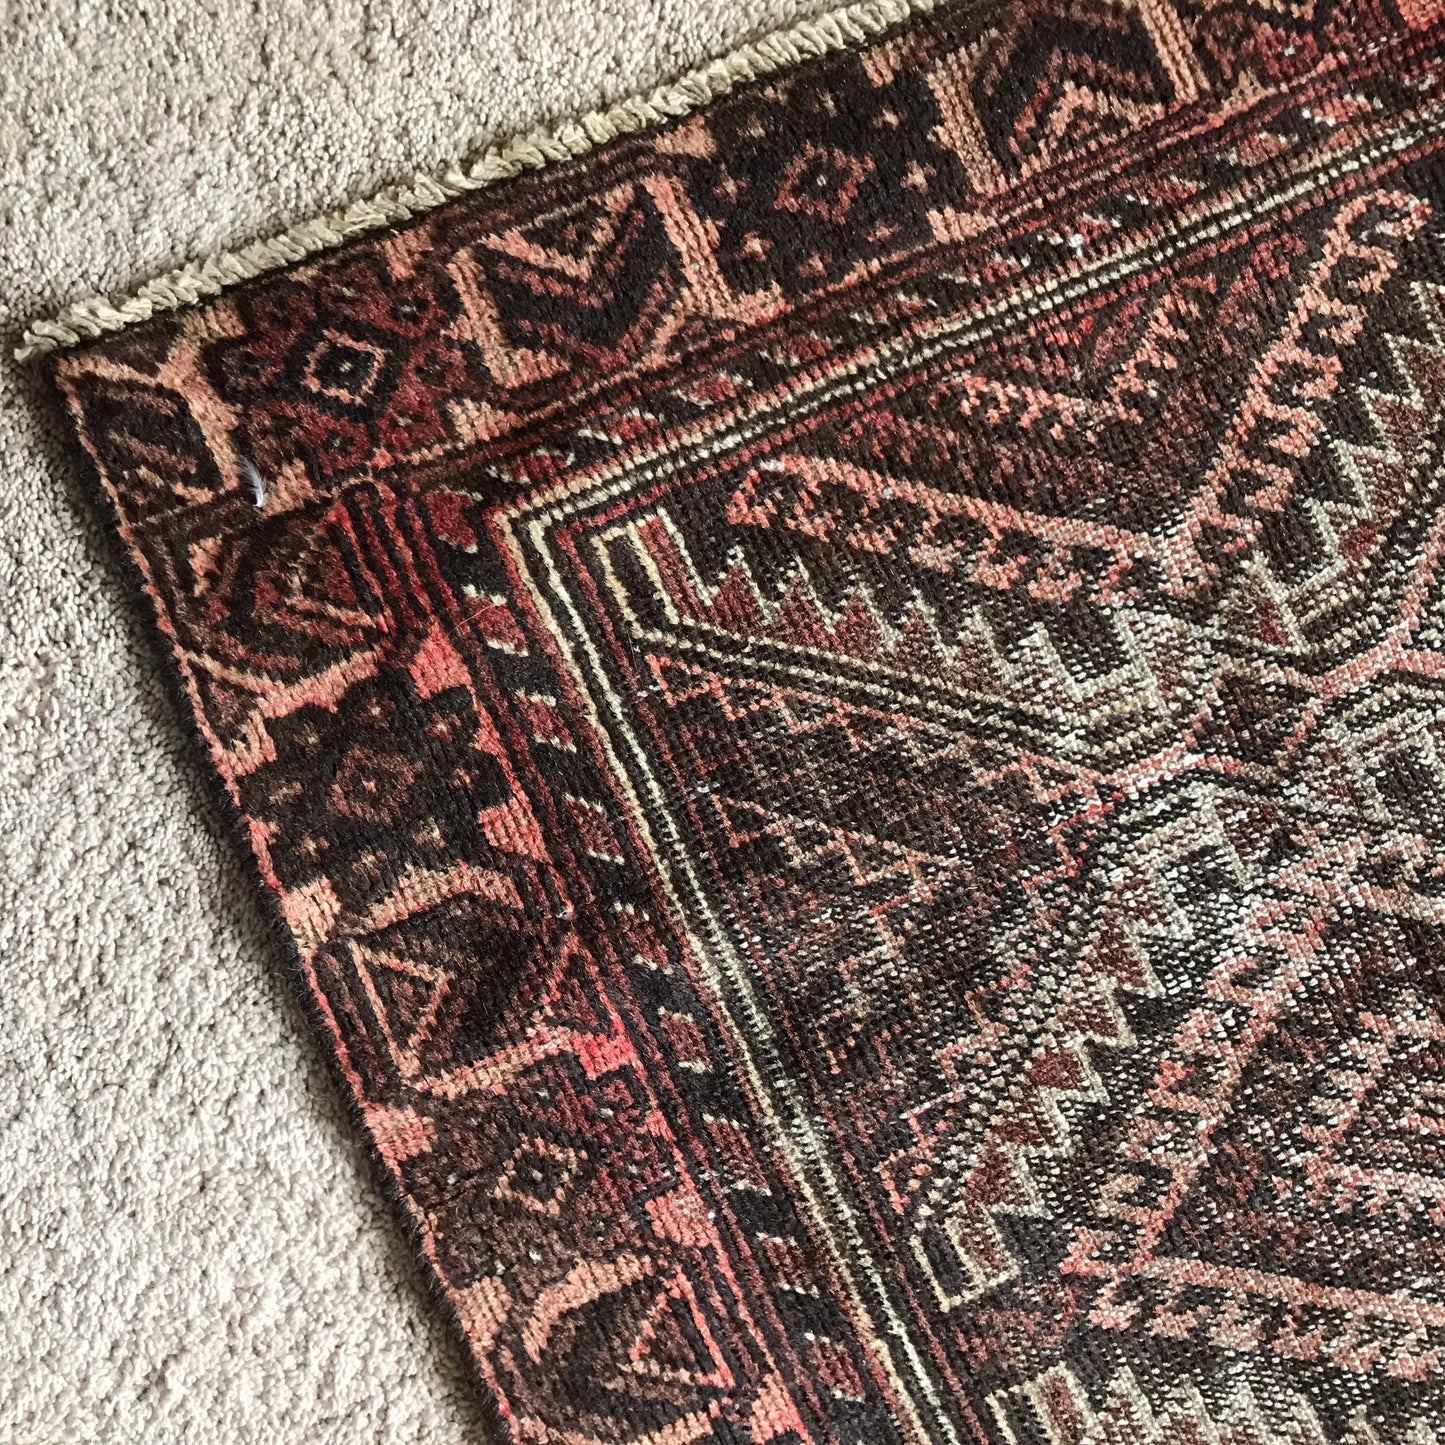 Vintage Persian Rug with Diamond Pattern (3.4 x 6)